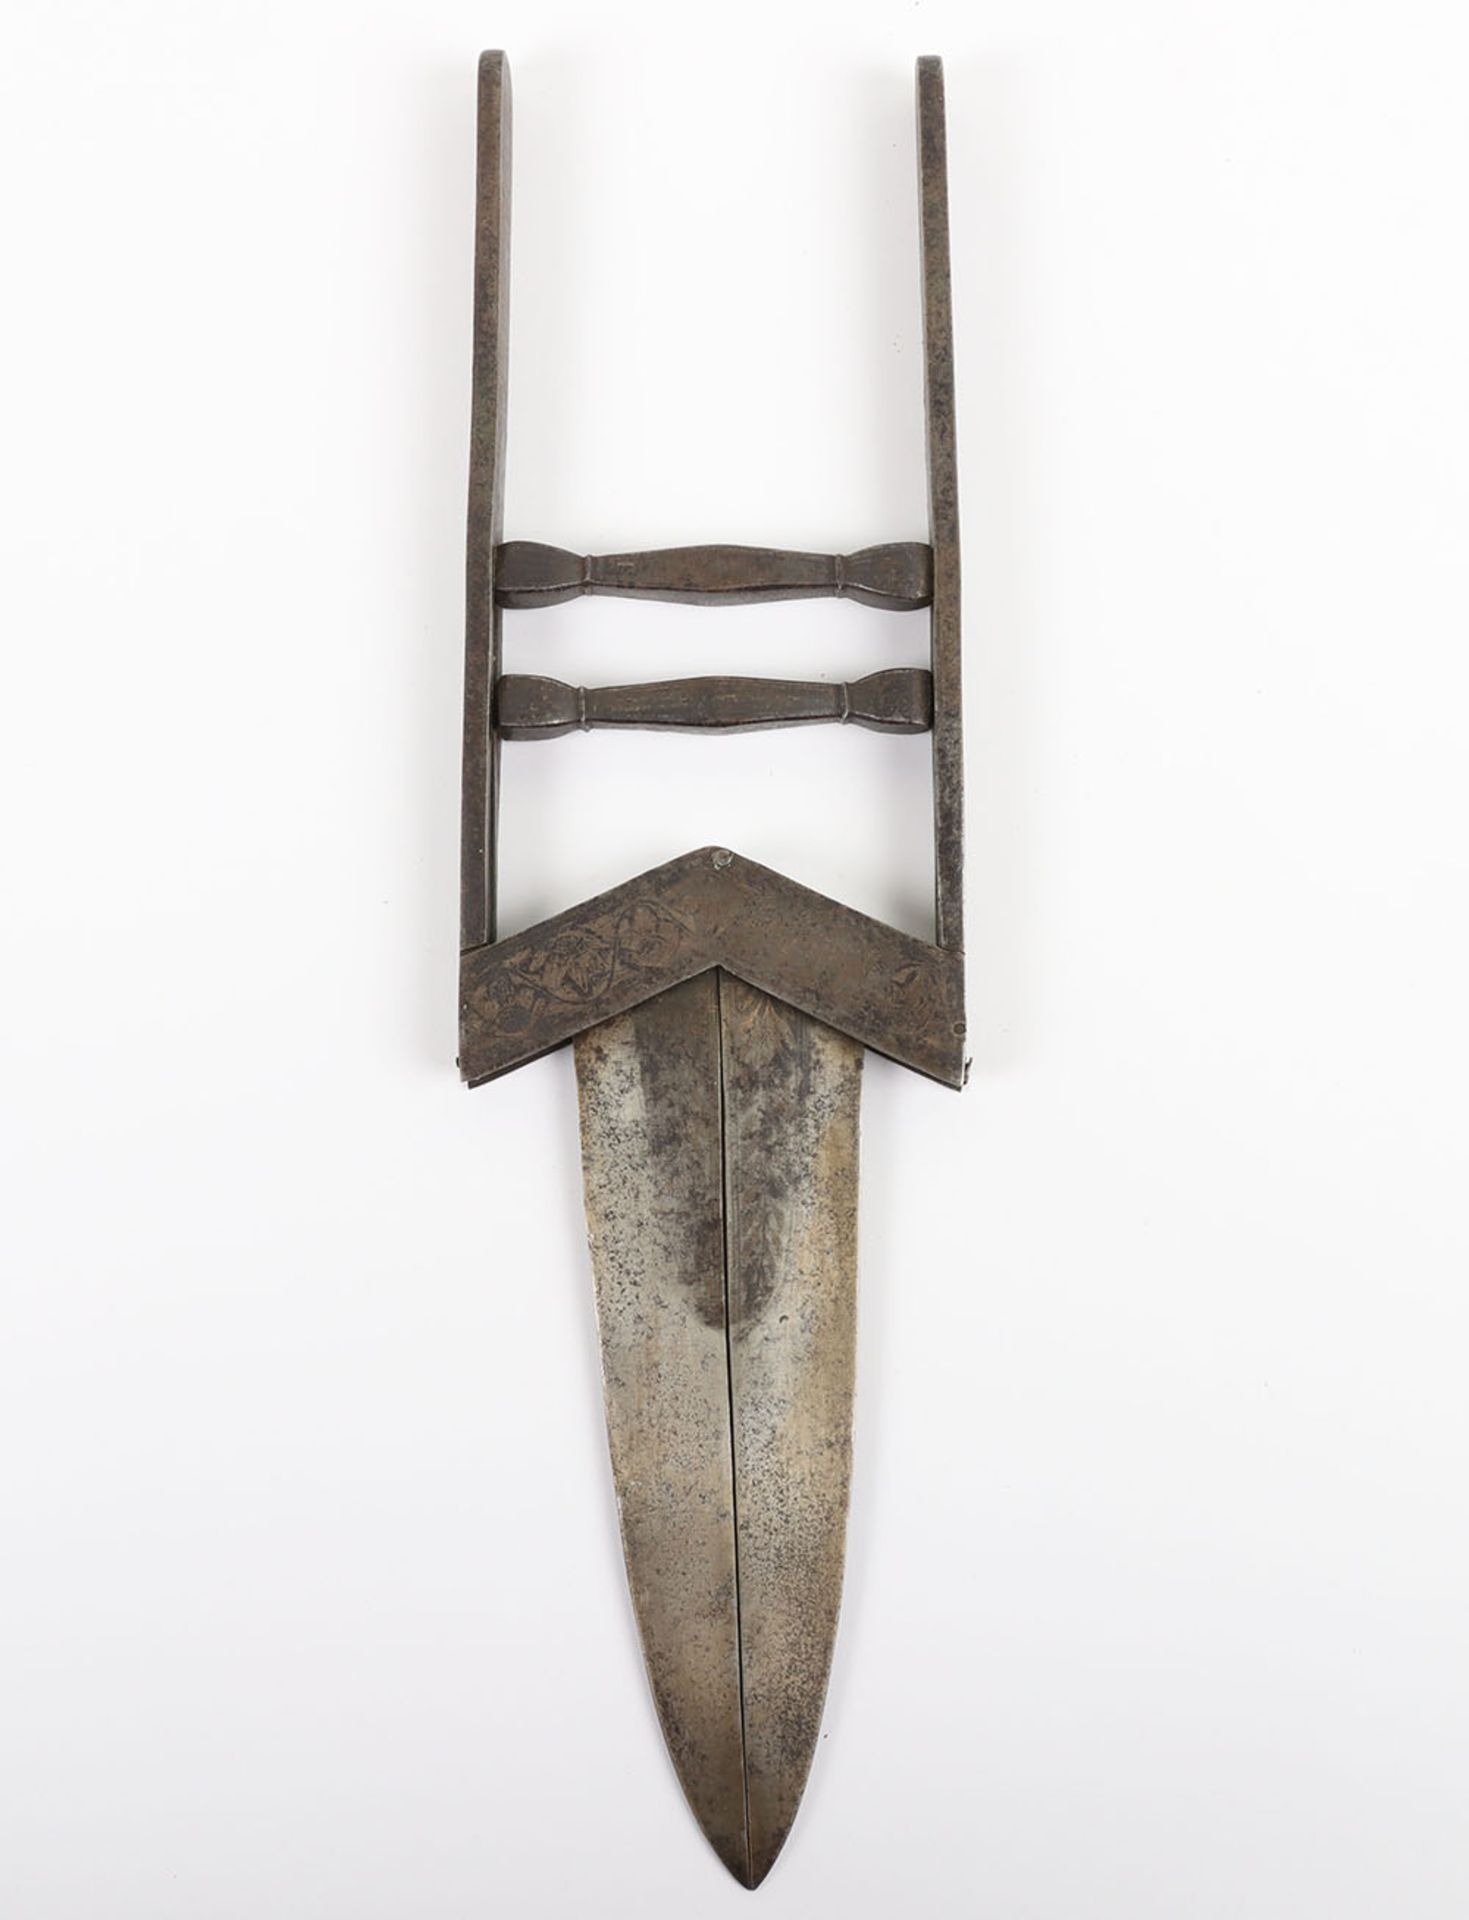 Large Indian Dagger ‘Scissors-Katar’, Late 19th Century